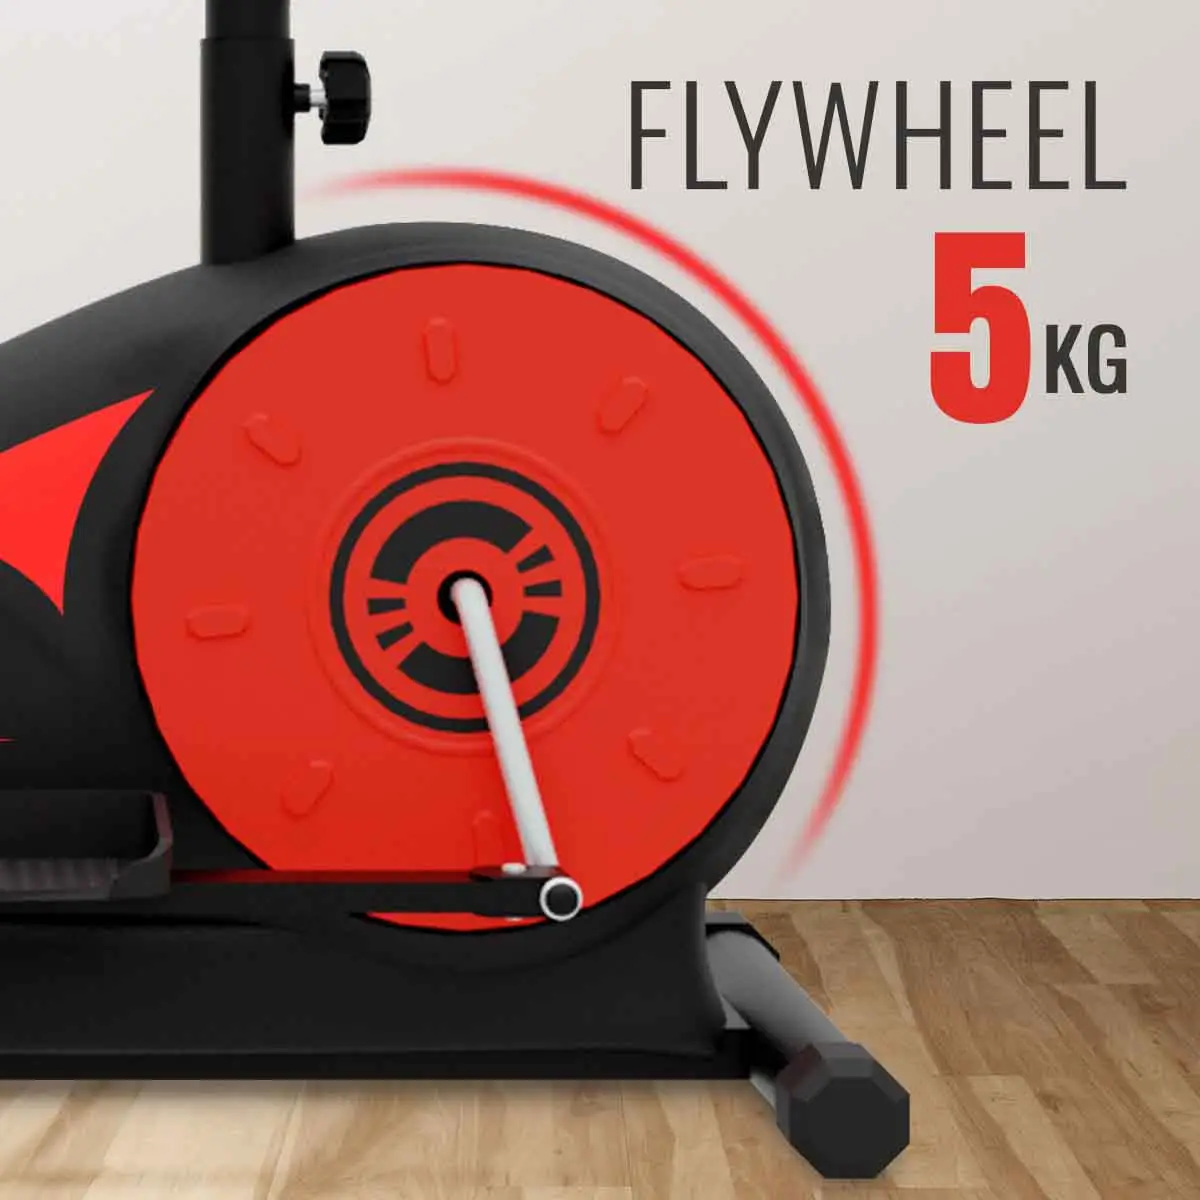 Durafit Cross Trainer EBS02 with Flywheel 5kg